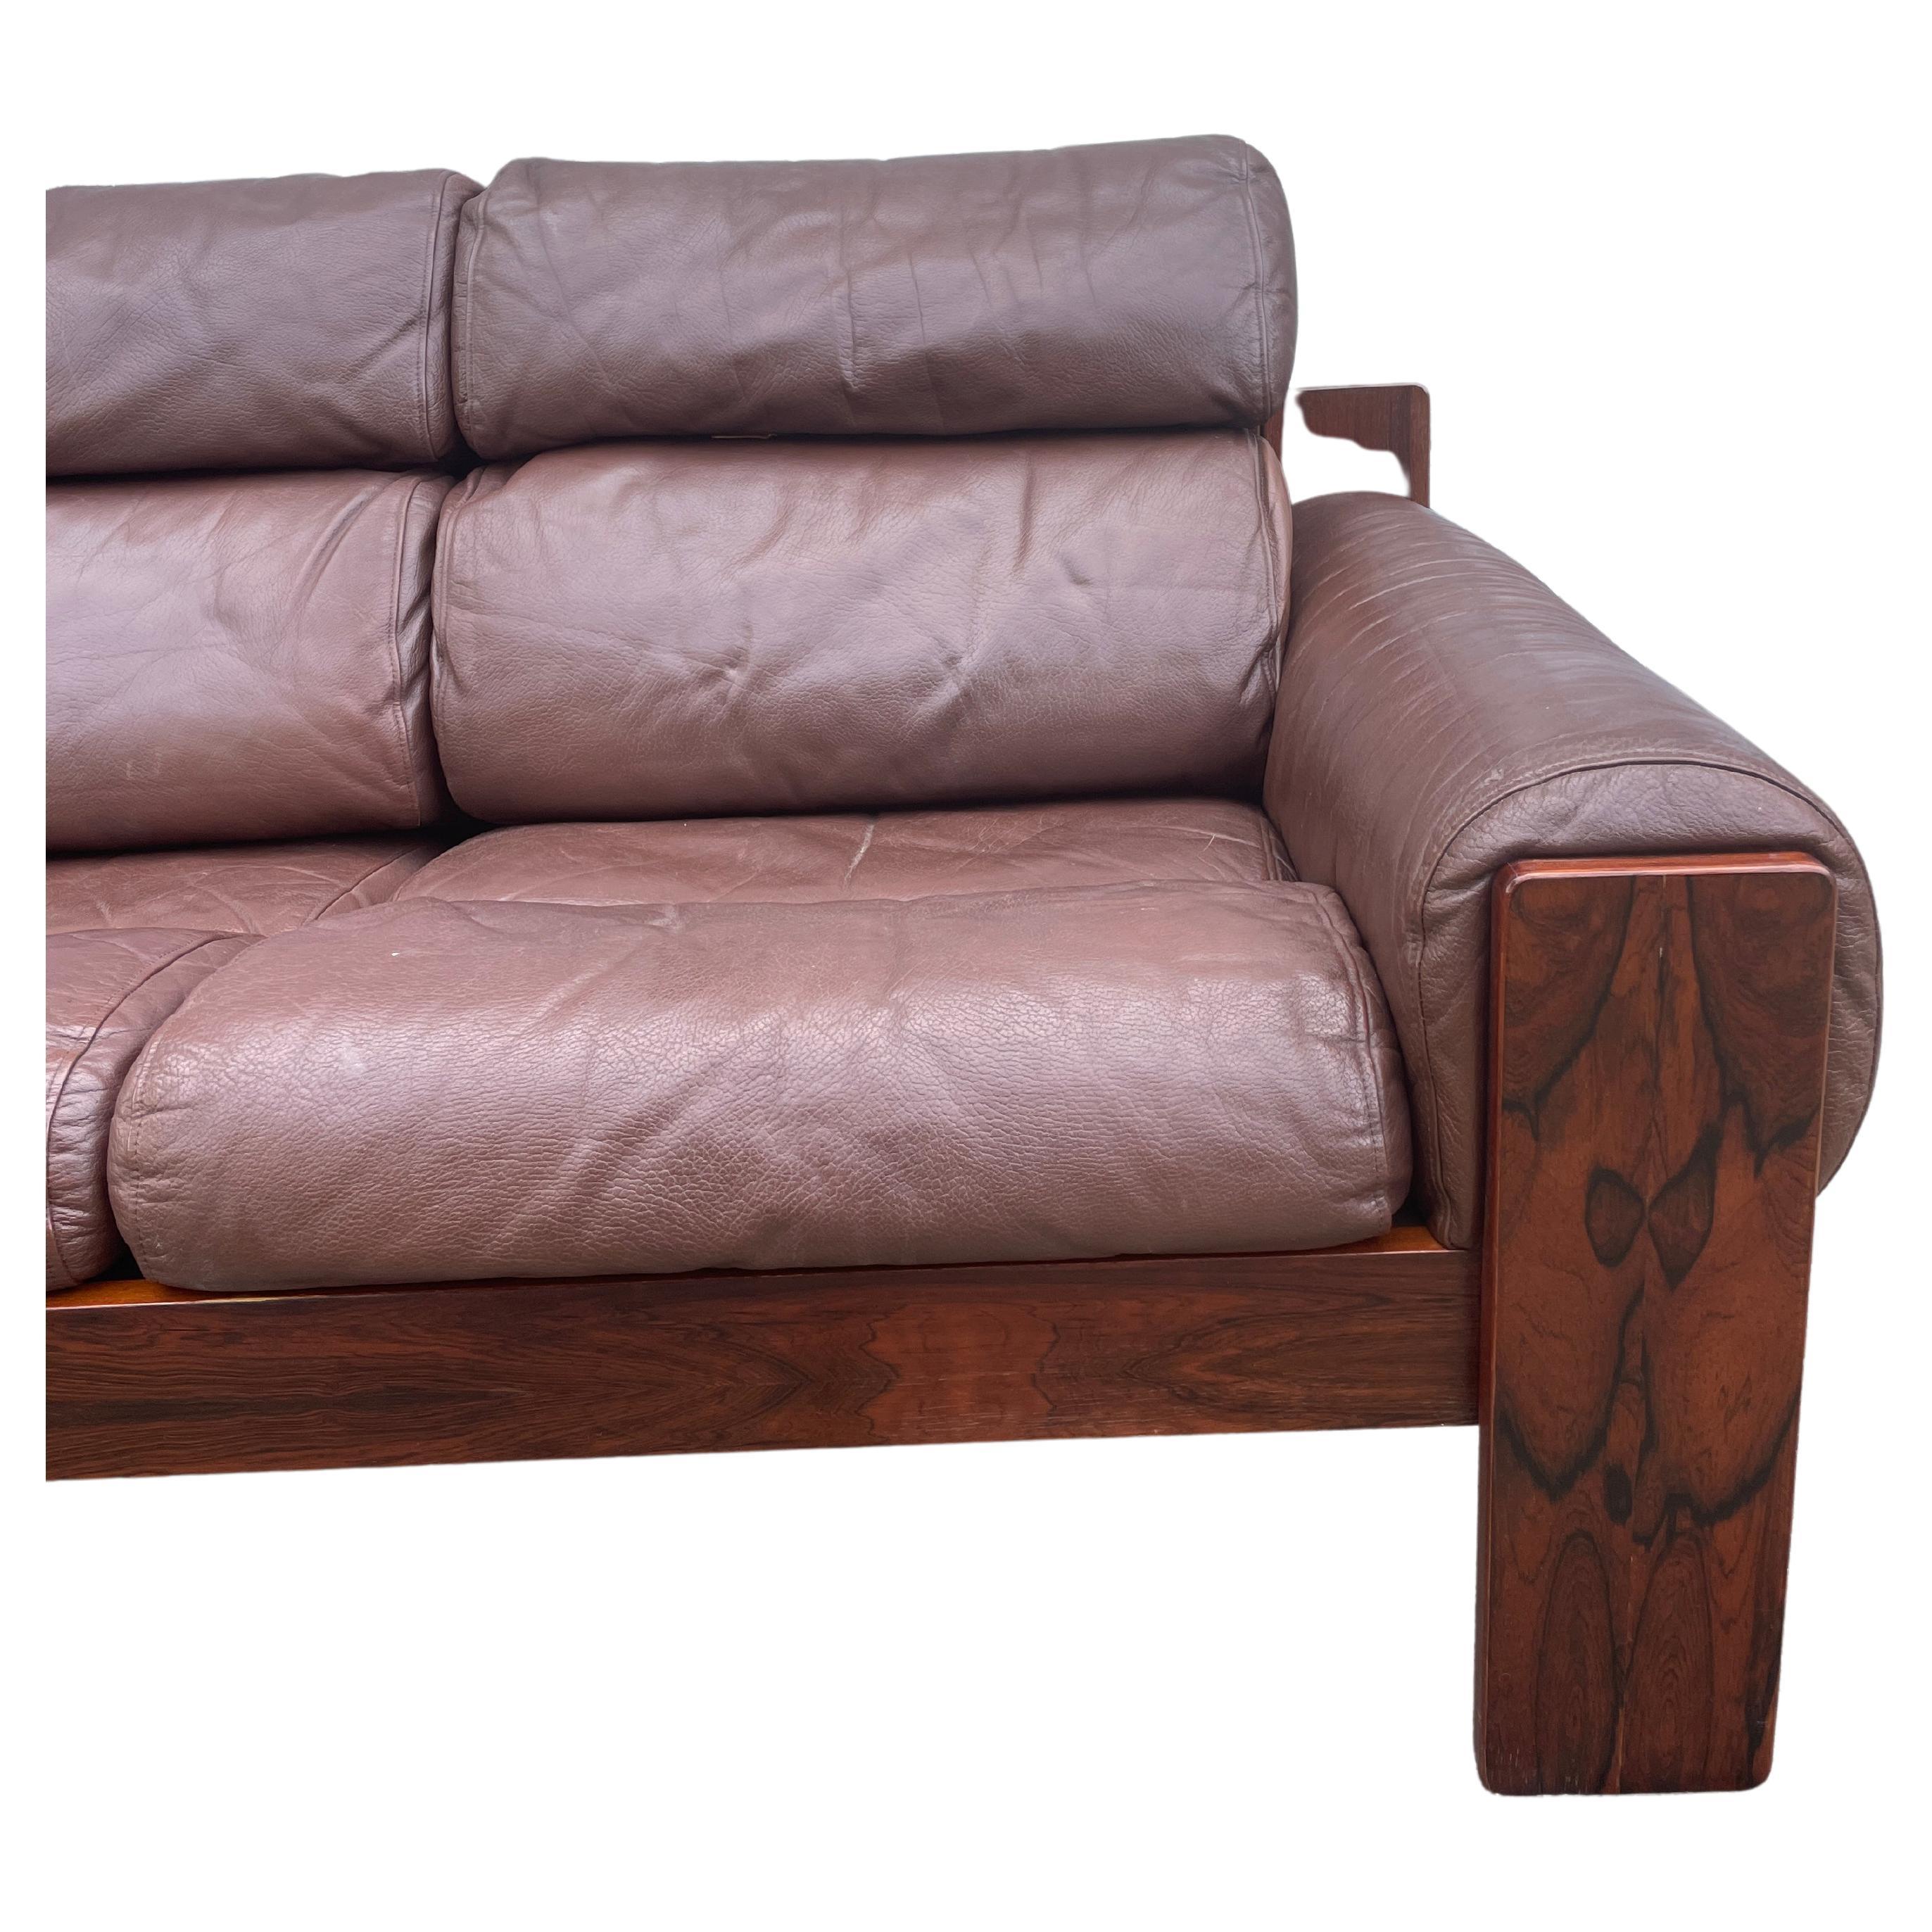 Finnish Superb Mid-Century Scandinavian Modern Leather Rosewood Sofa from Finland